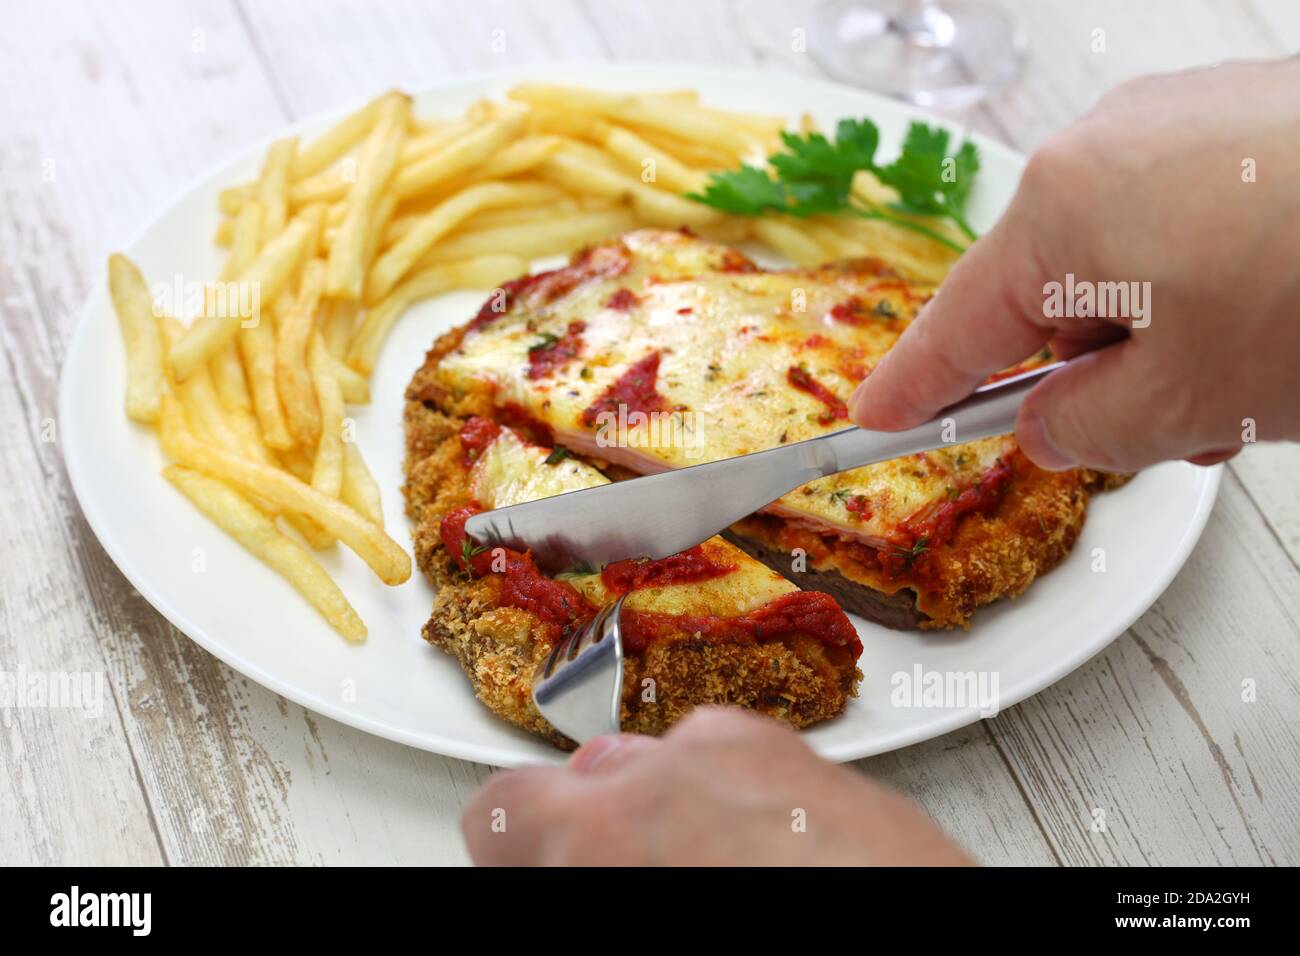 milanesa a la napolitana, Argentina breaded beef cutlet with mozzarella cheese & tomato sauce Stock Photo